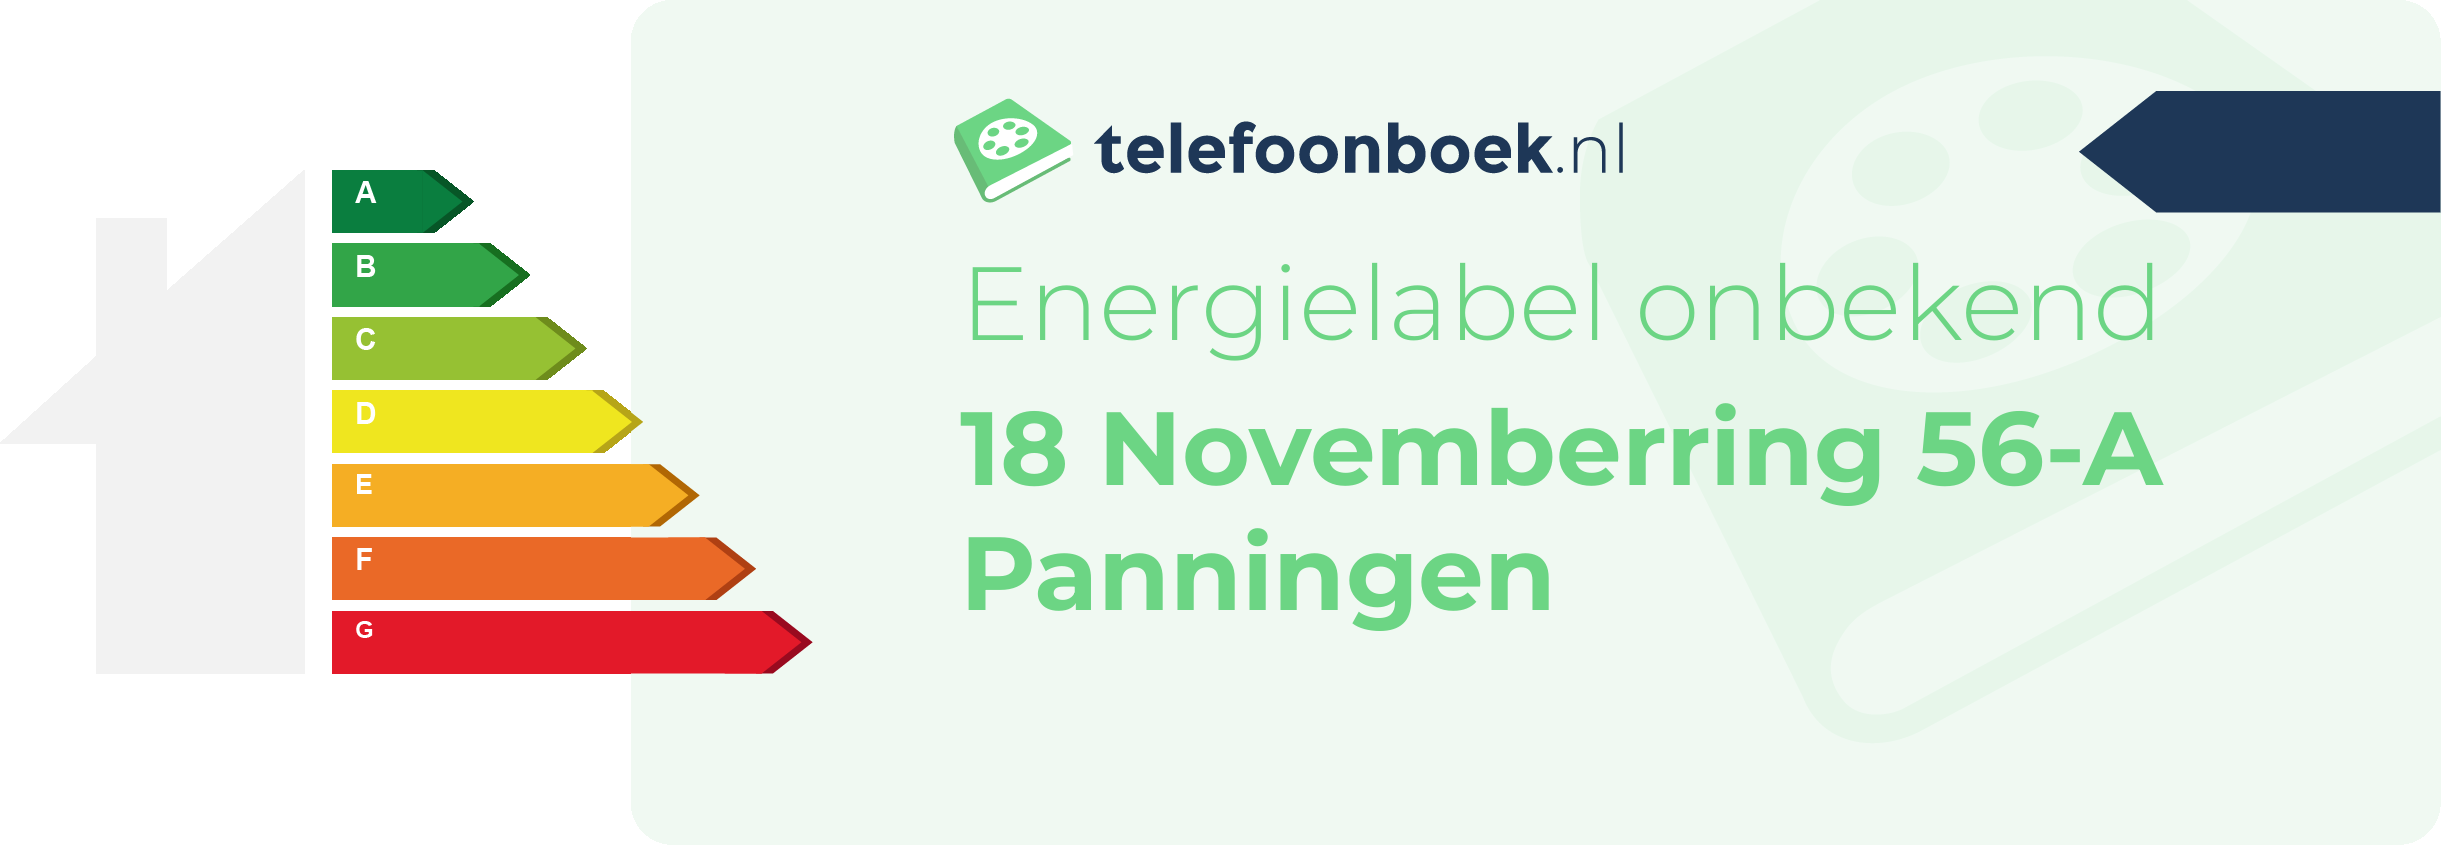 Energielabel 18 Novemberring 56-A Panningen